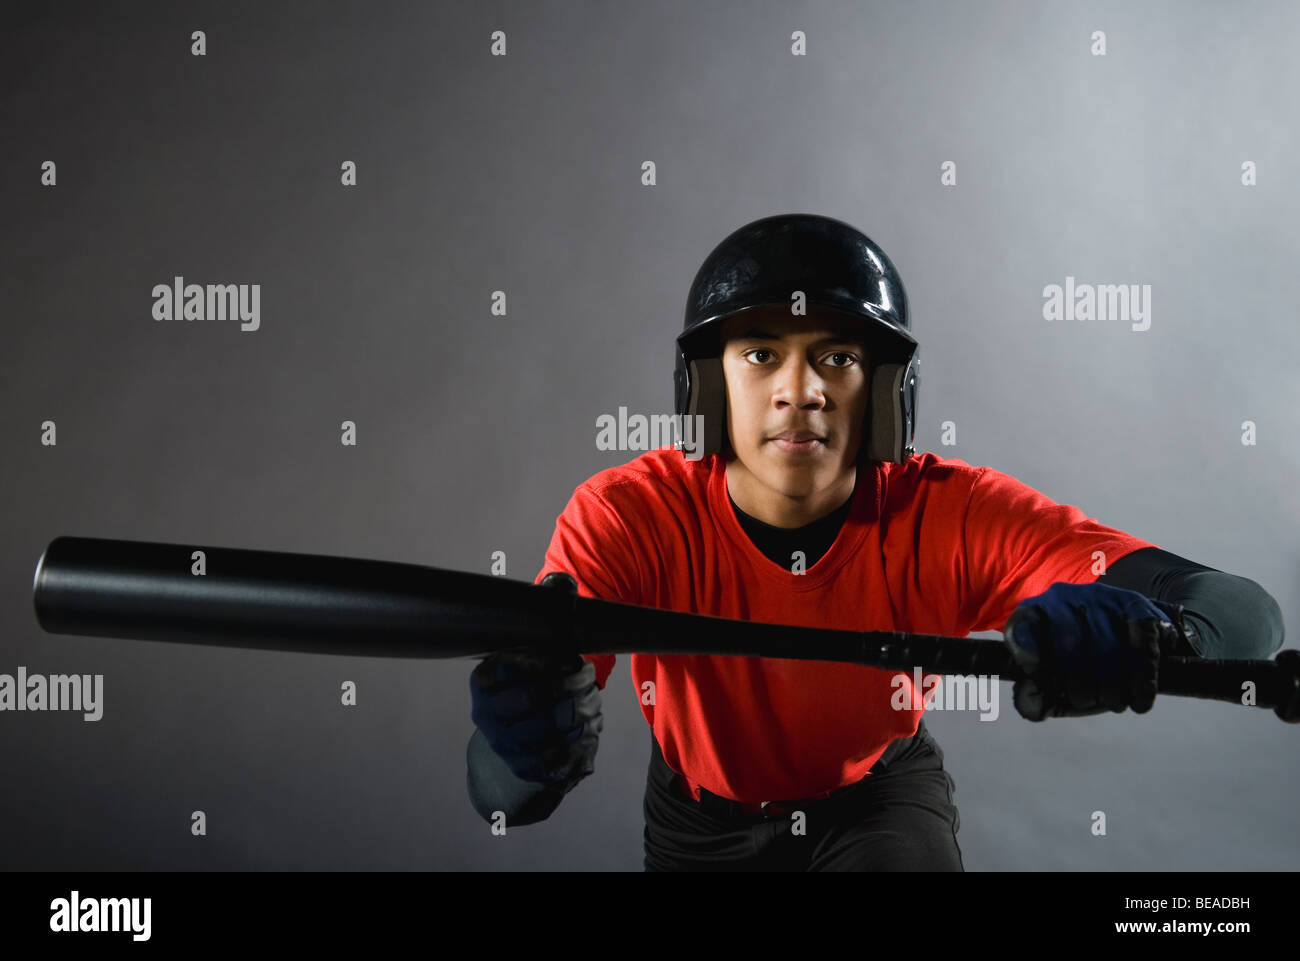 Mixed race baseball player ready to bunt with baseball bat Stock Photo